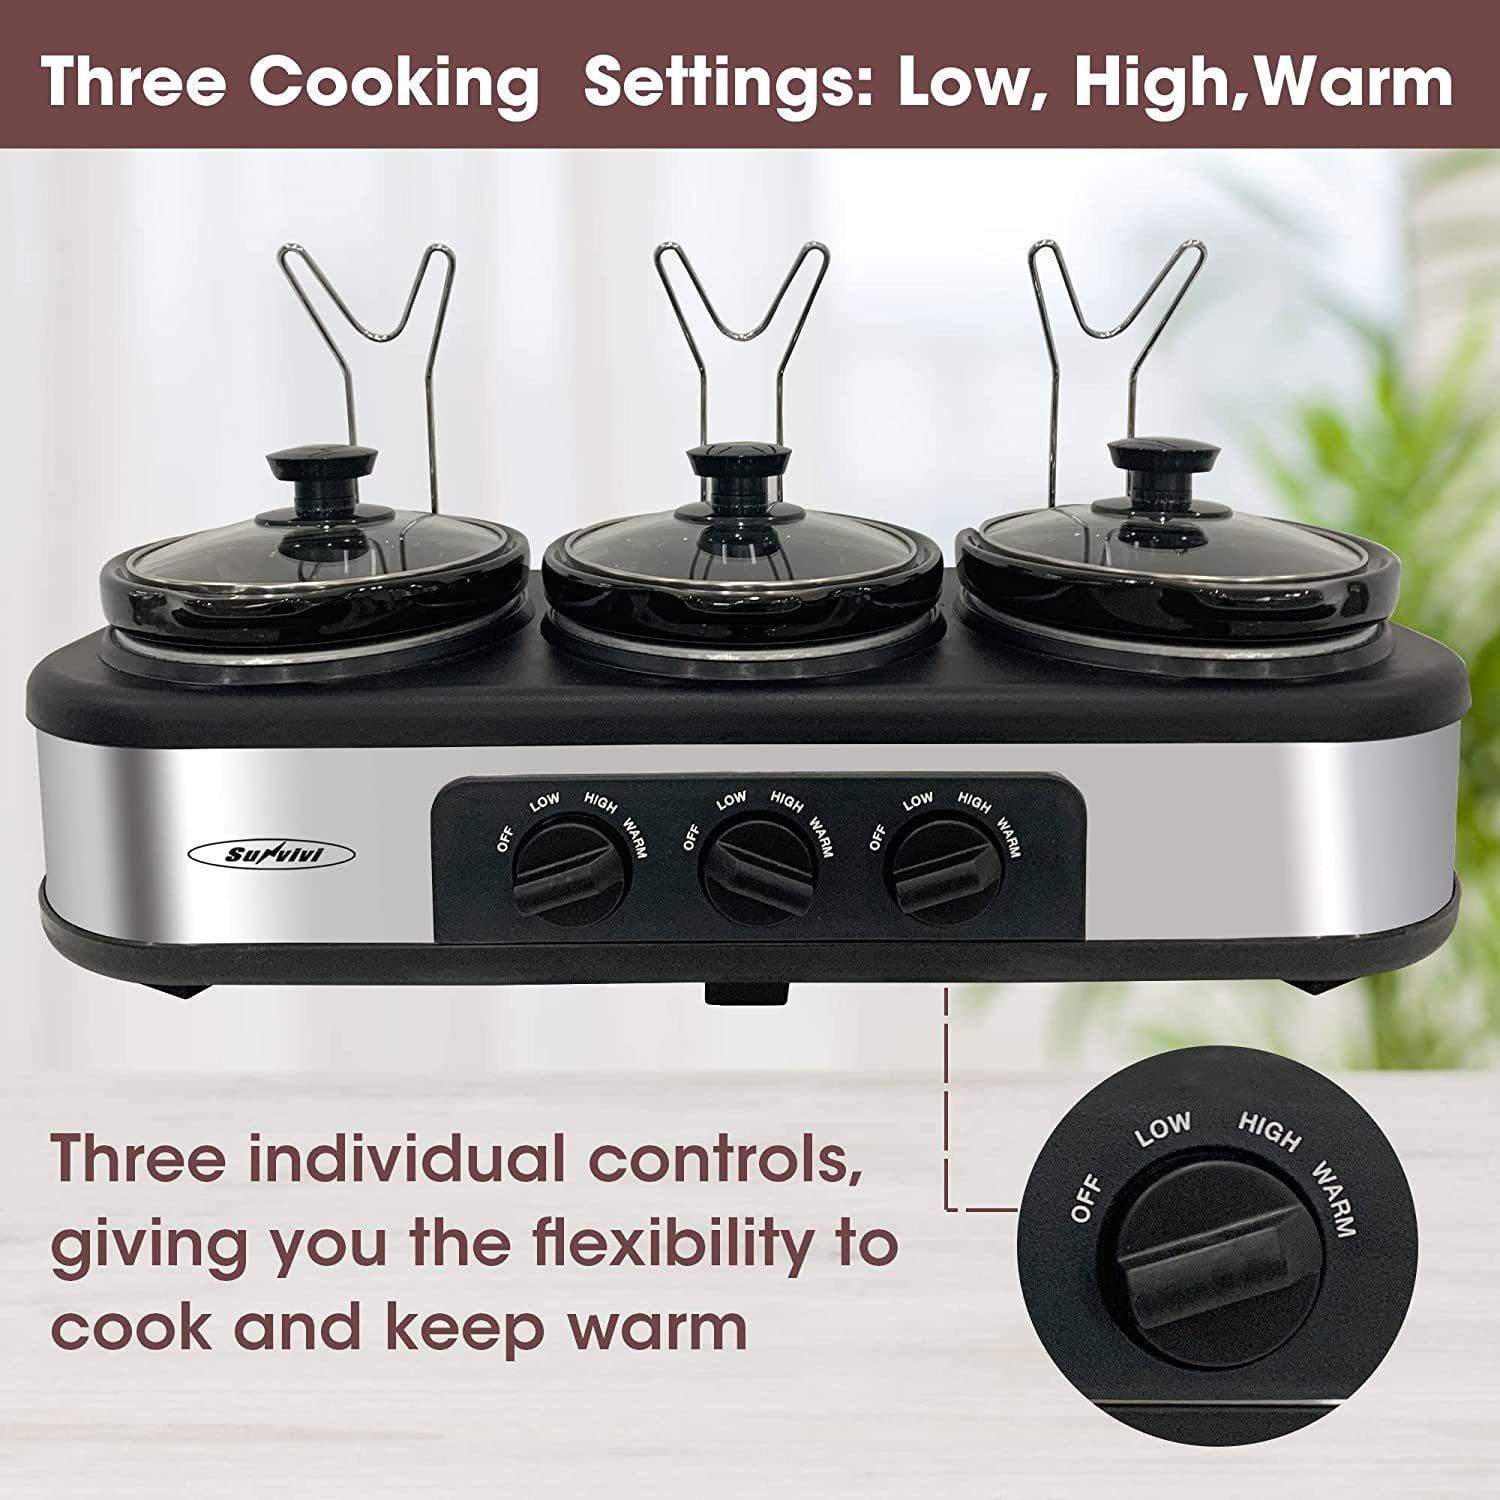 Superjoe Dual Pot Slow Cooker Buffet Server Stainless Steel Crock Pot Food Warmer,2x1.25QT, Size: One size, Silver